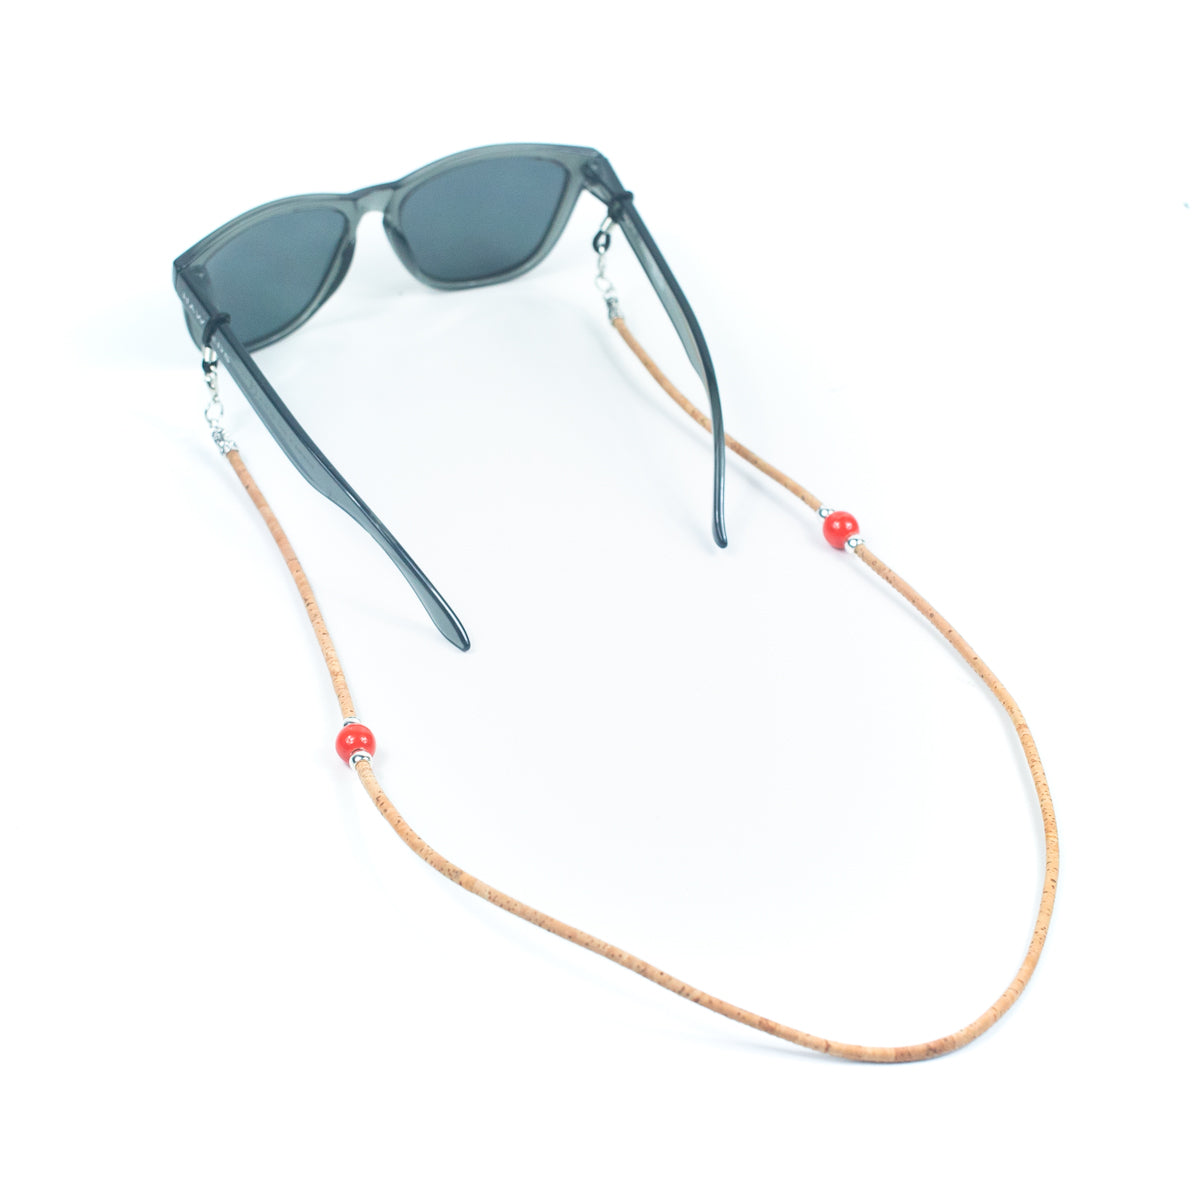 3MM Handmade Round Cork Thread Eyeglass Holder Glasses | THE CORK COLLECTION